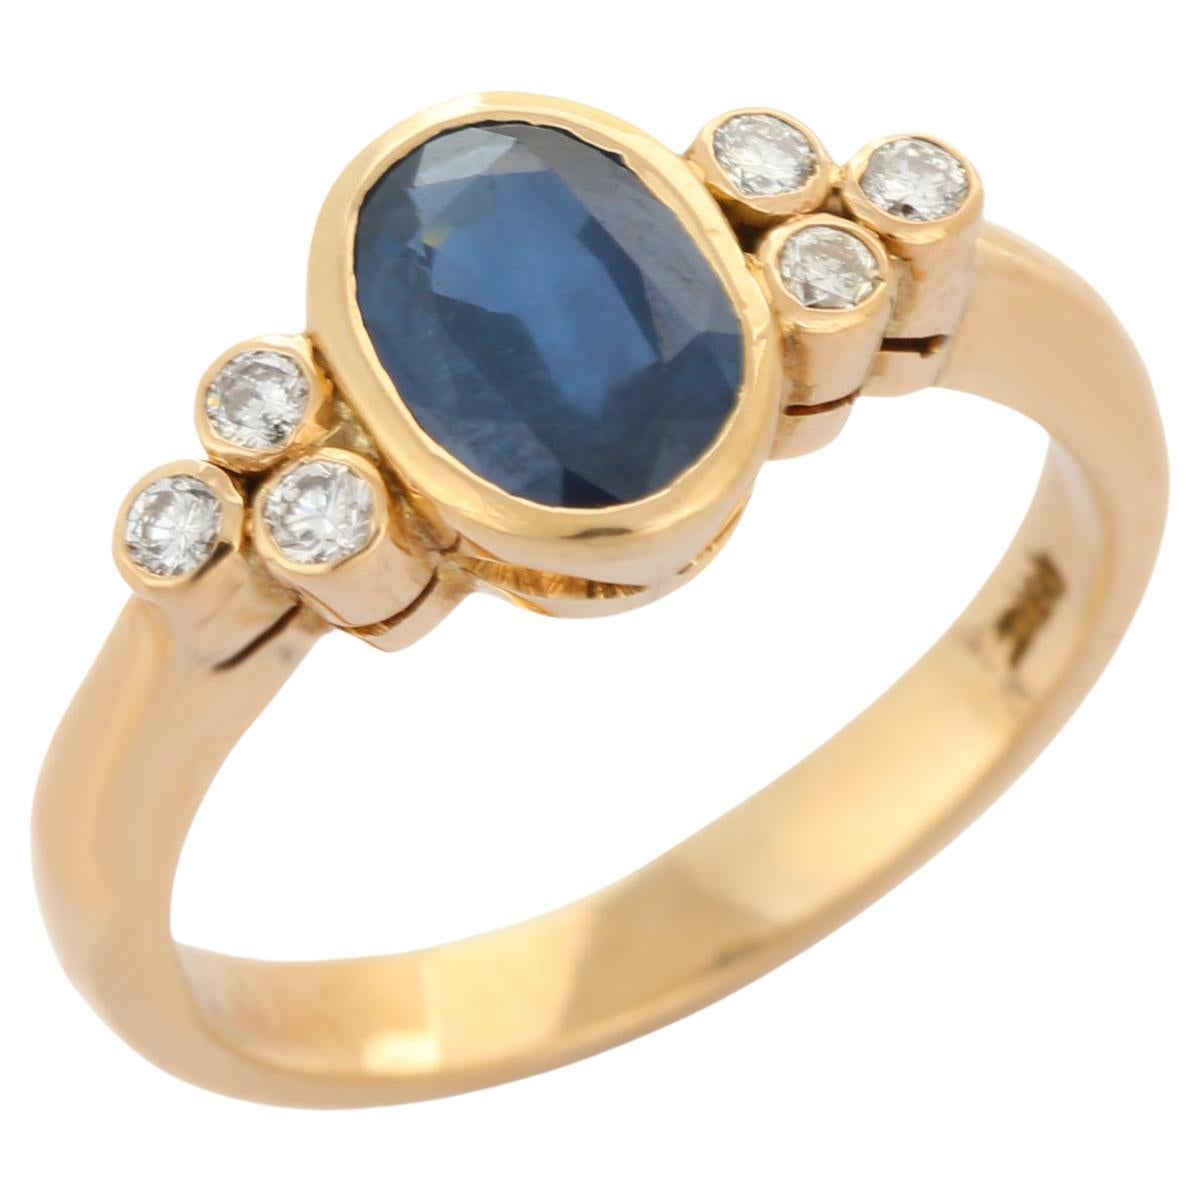 Bague moderne en or jaune 18 carats avec saphir bleu naturel de 1,7 carat et diamants